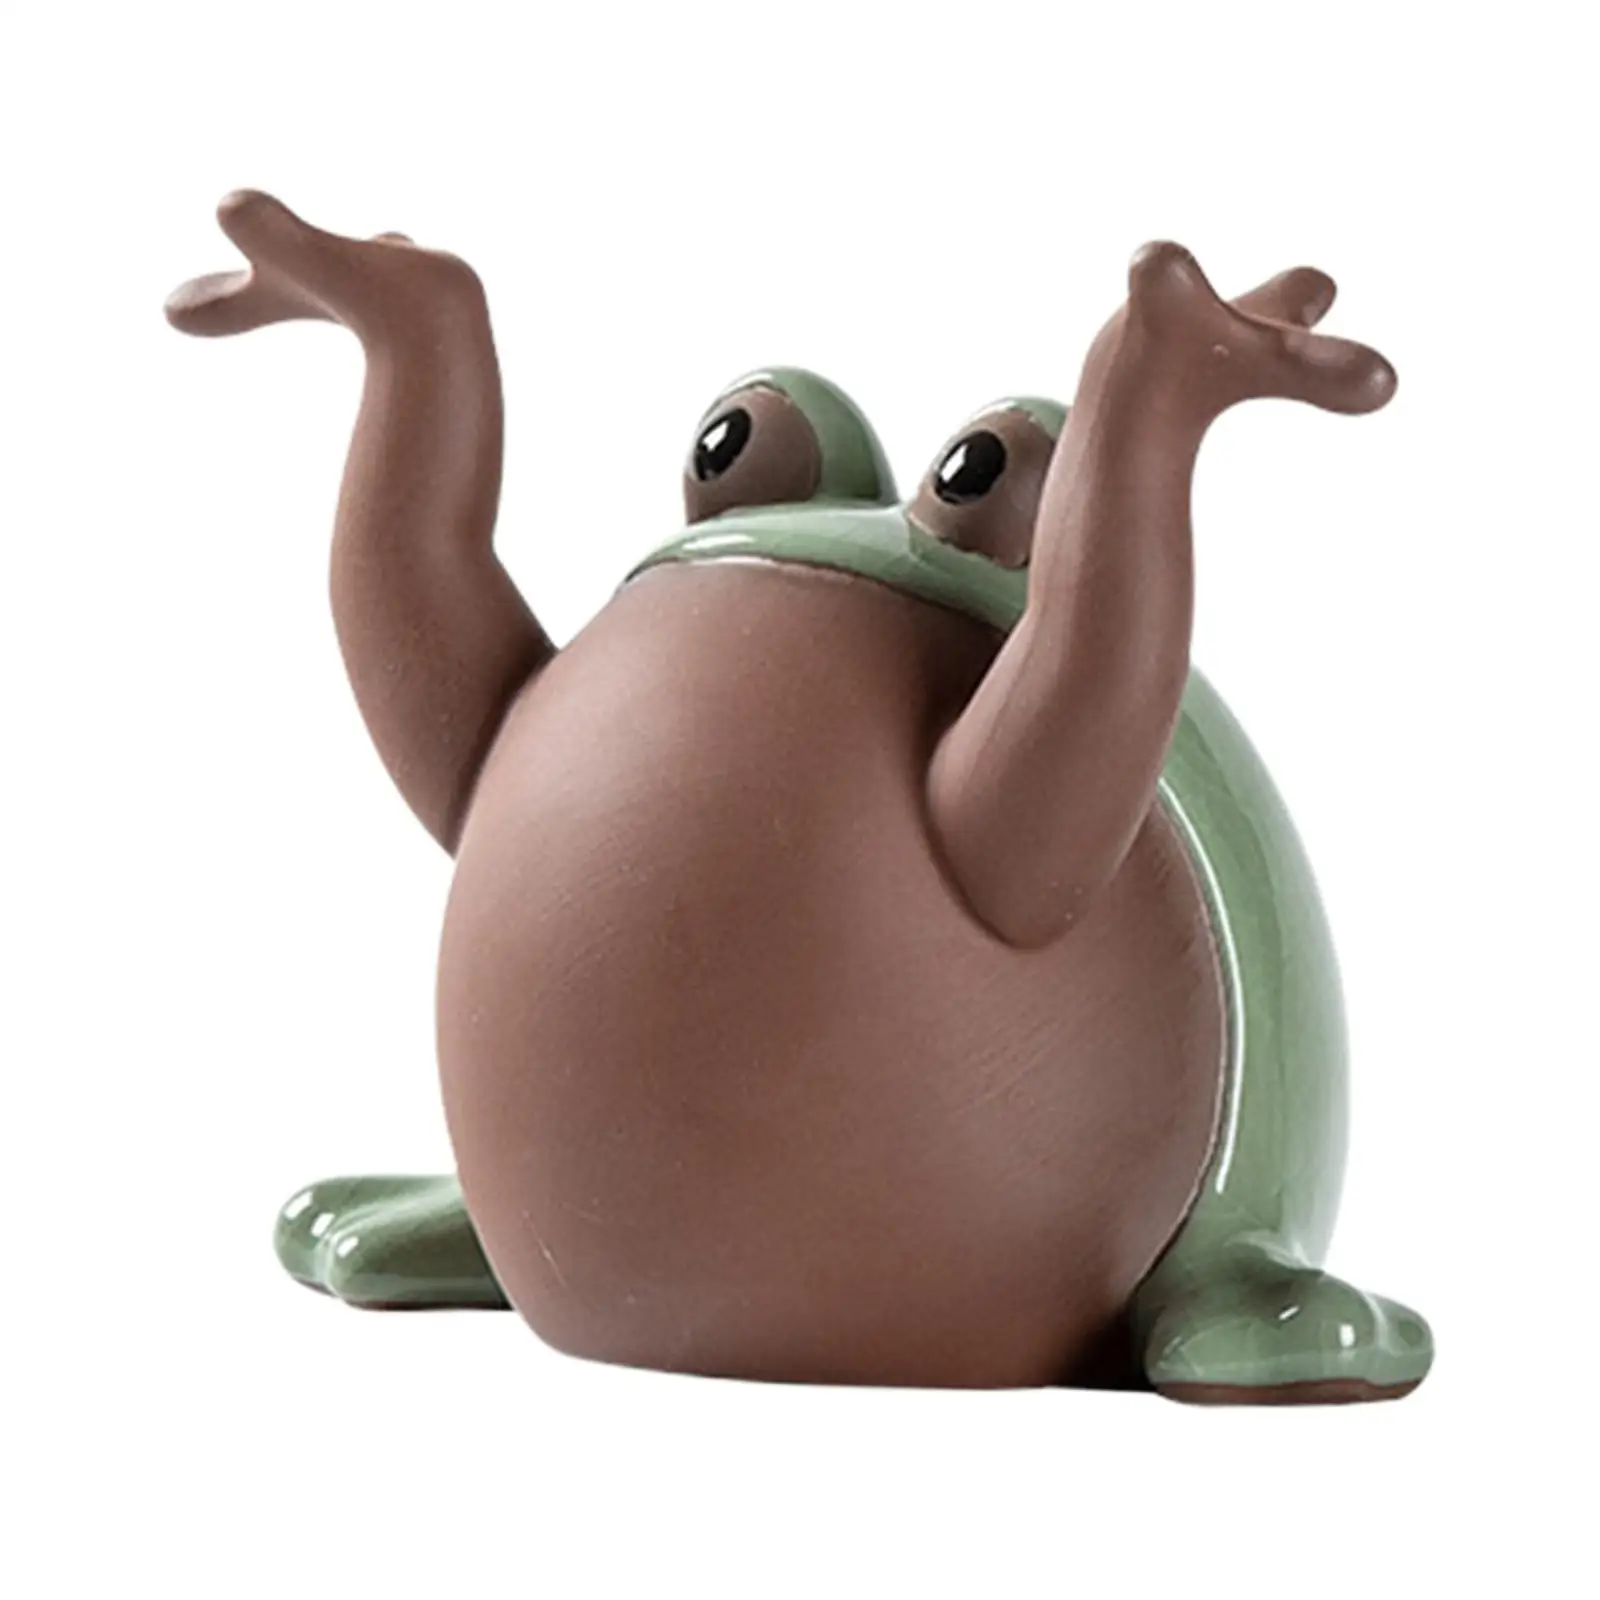 Tea Pet for Kungfu Tea Figurine Collection Ornament Frog Statue Sculpture for Tea Room Living Room Bedroom Table Centerpiece